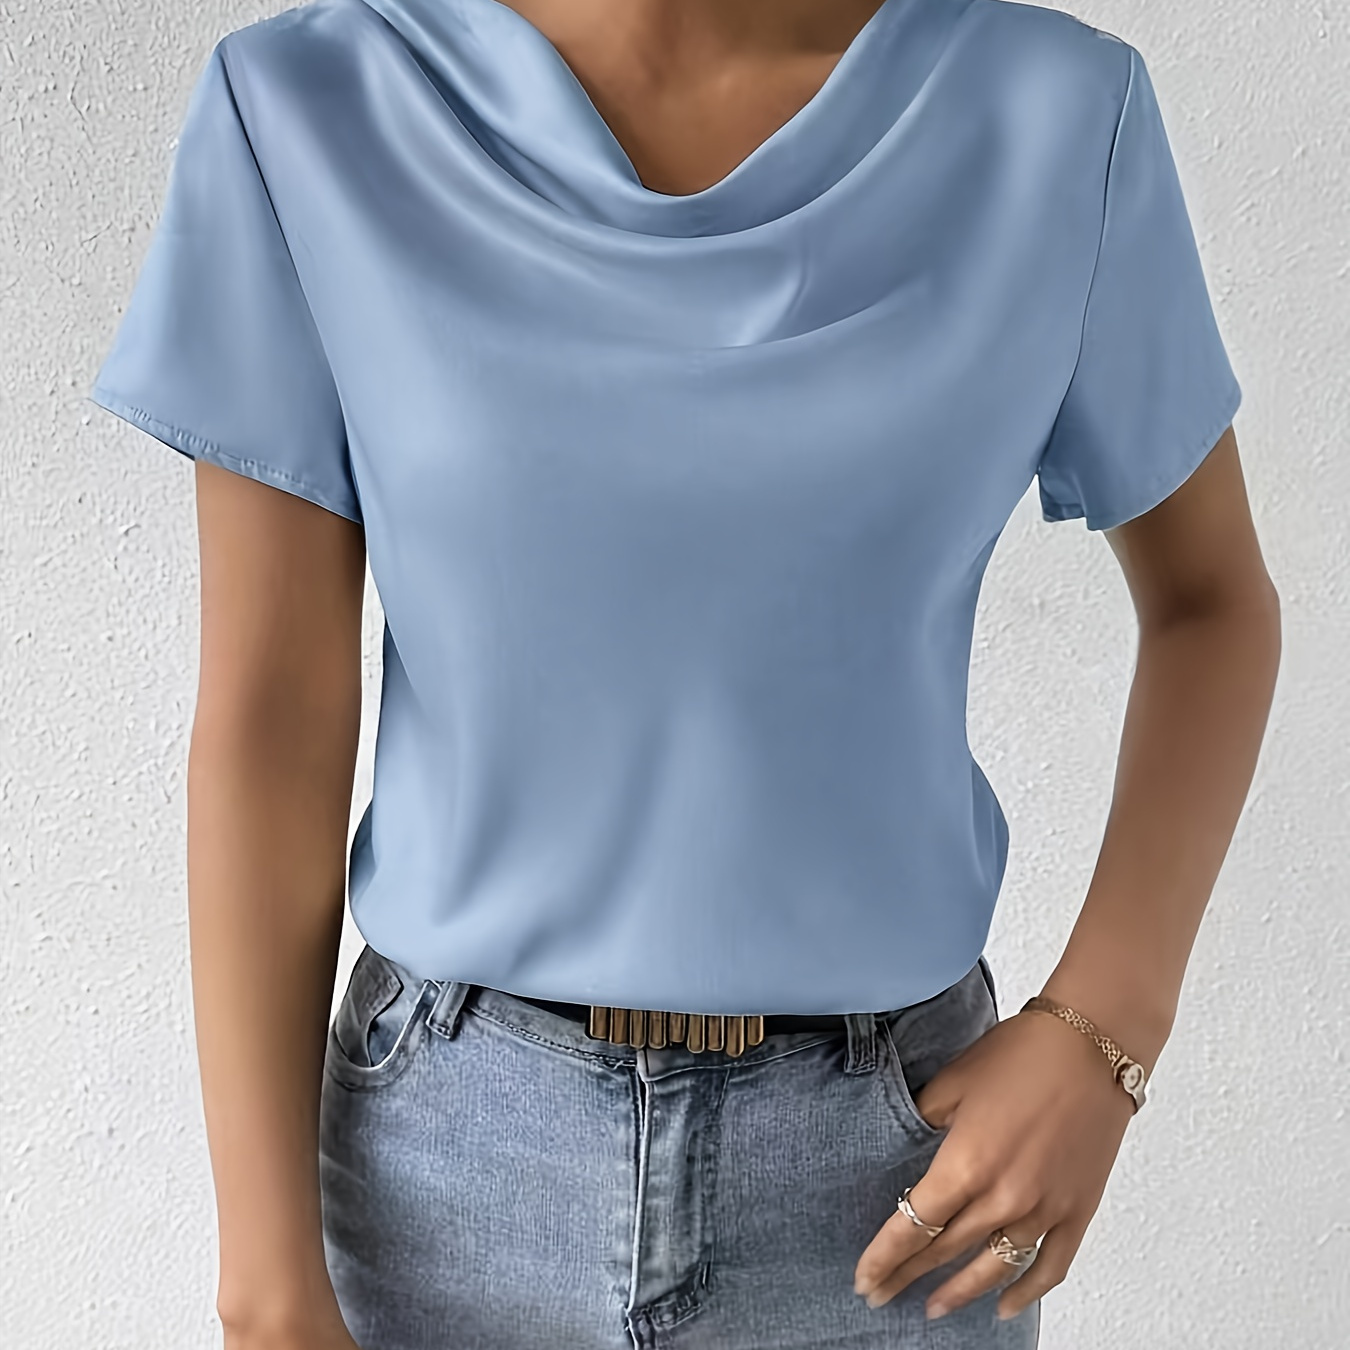 

Cowl Neck Solid Color Blouse, Elegant Short Sleeve Blouse For Spring & Summer, Women's Clothing